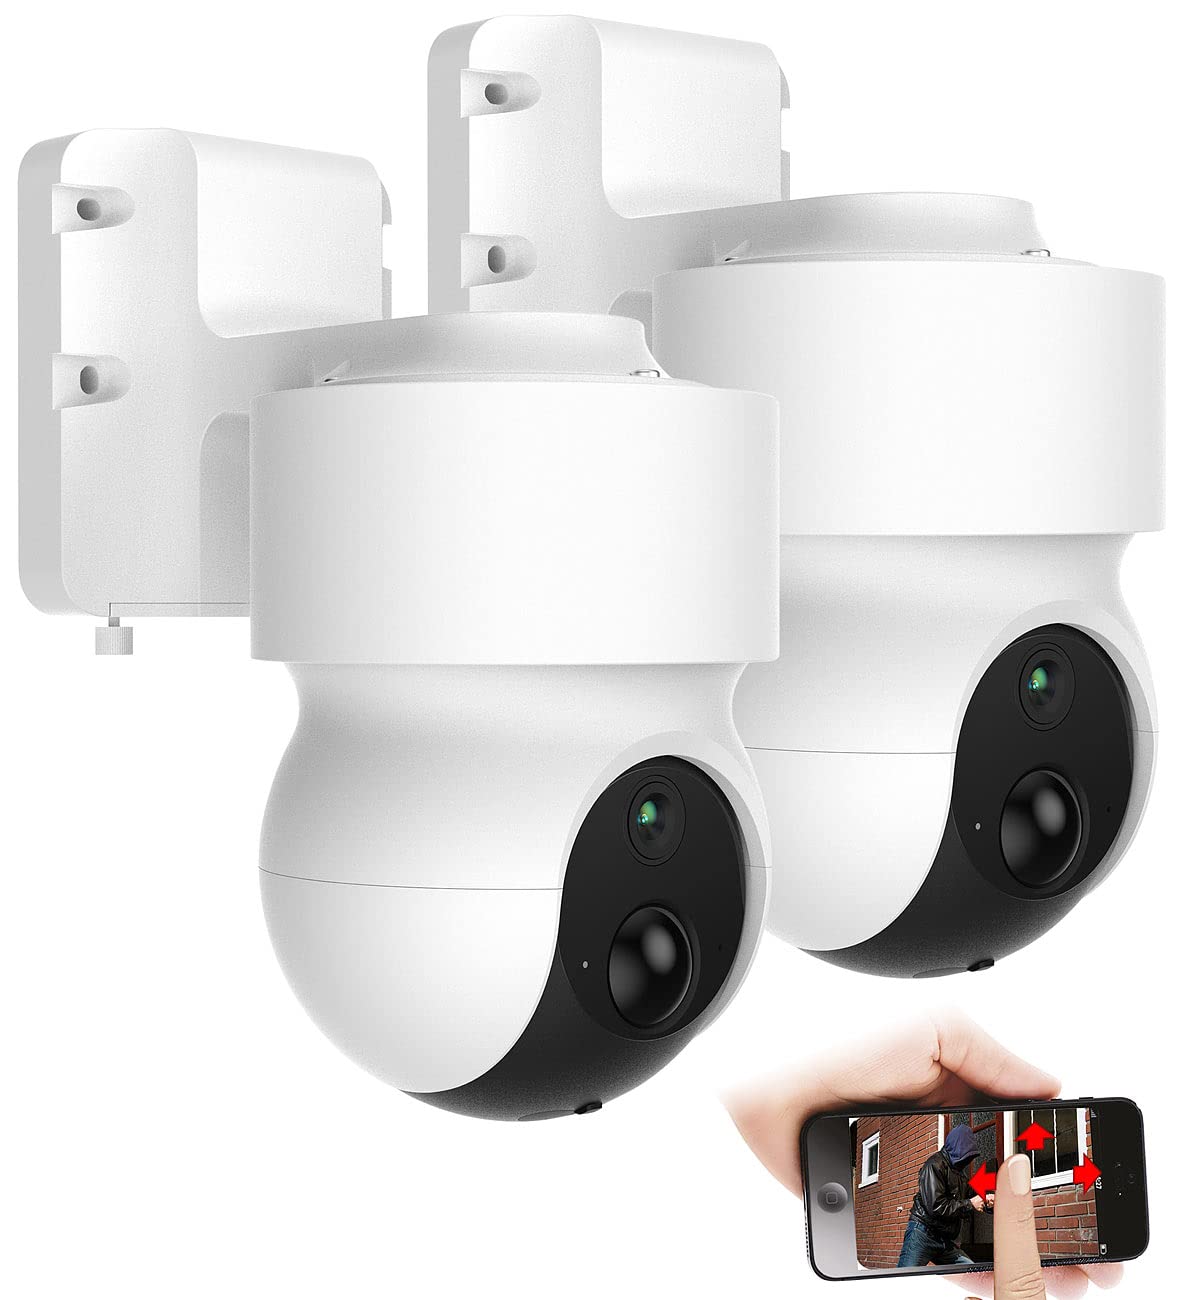 7links Kamera Überwachung Funk: 2er-Set Pan-Tilt-Akku-Überwachungskameras, Full HD, WLAN, App, 120° (WiFi-IP-Überwachungskamera, Full-HD Überwachungskamera WLAN, Bewegungsmelder)